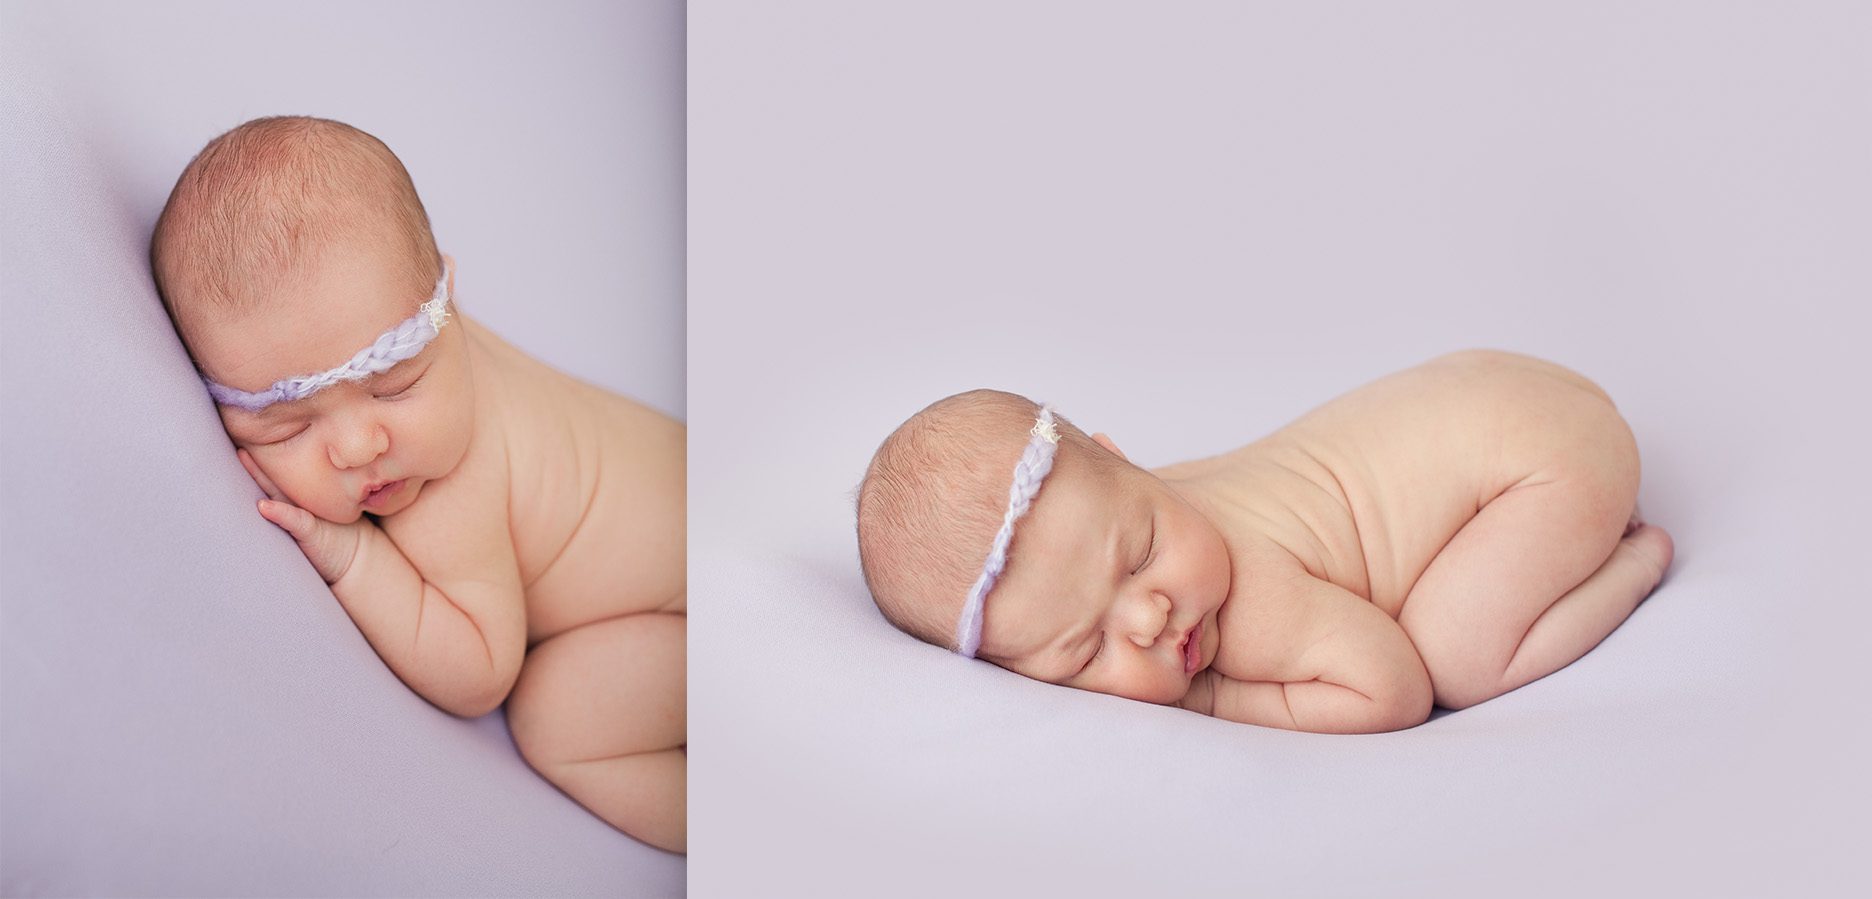 Edmonton newborn photographer - newborn posed on purple